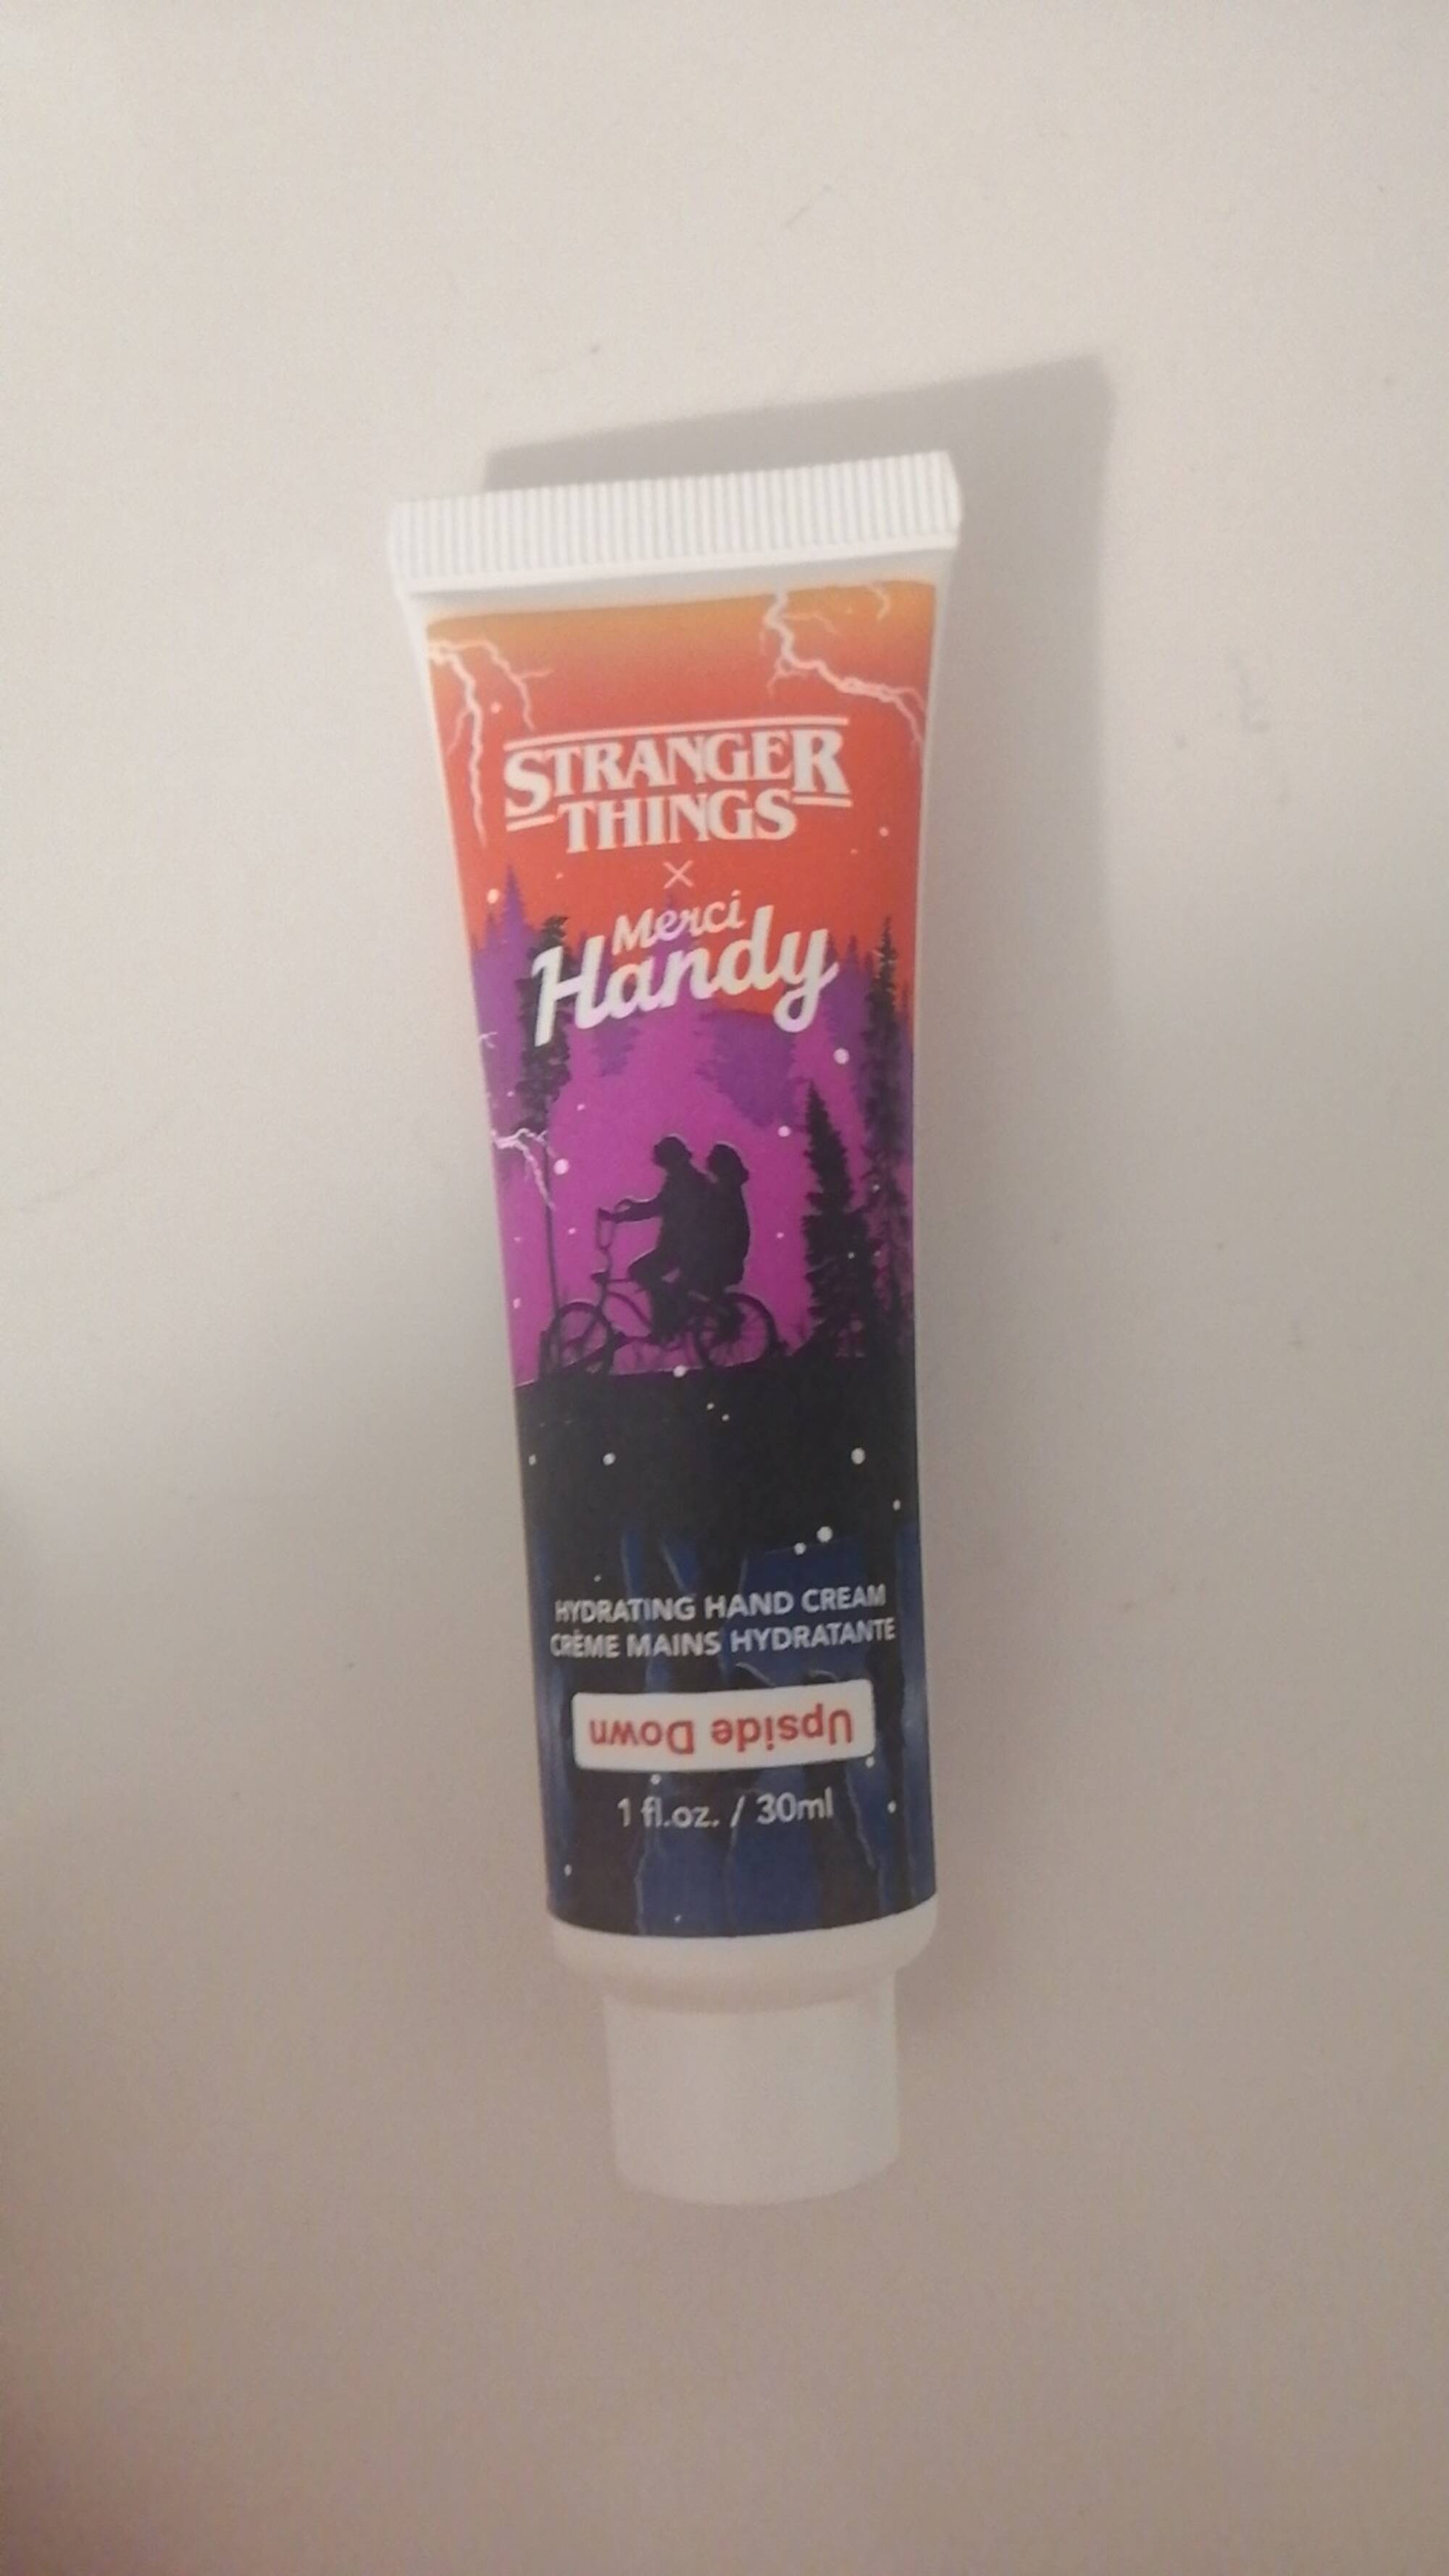 MERCI HANDY - Stranger things - Crème mains hydratante